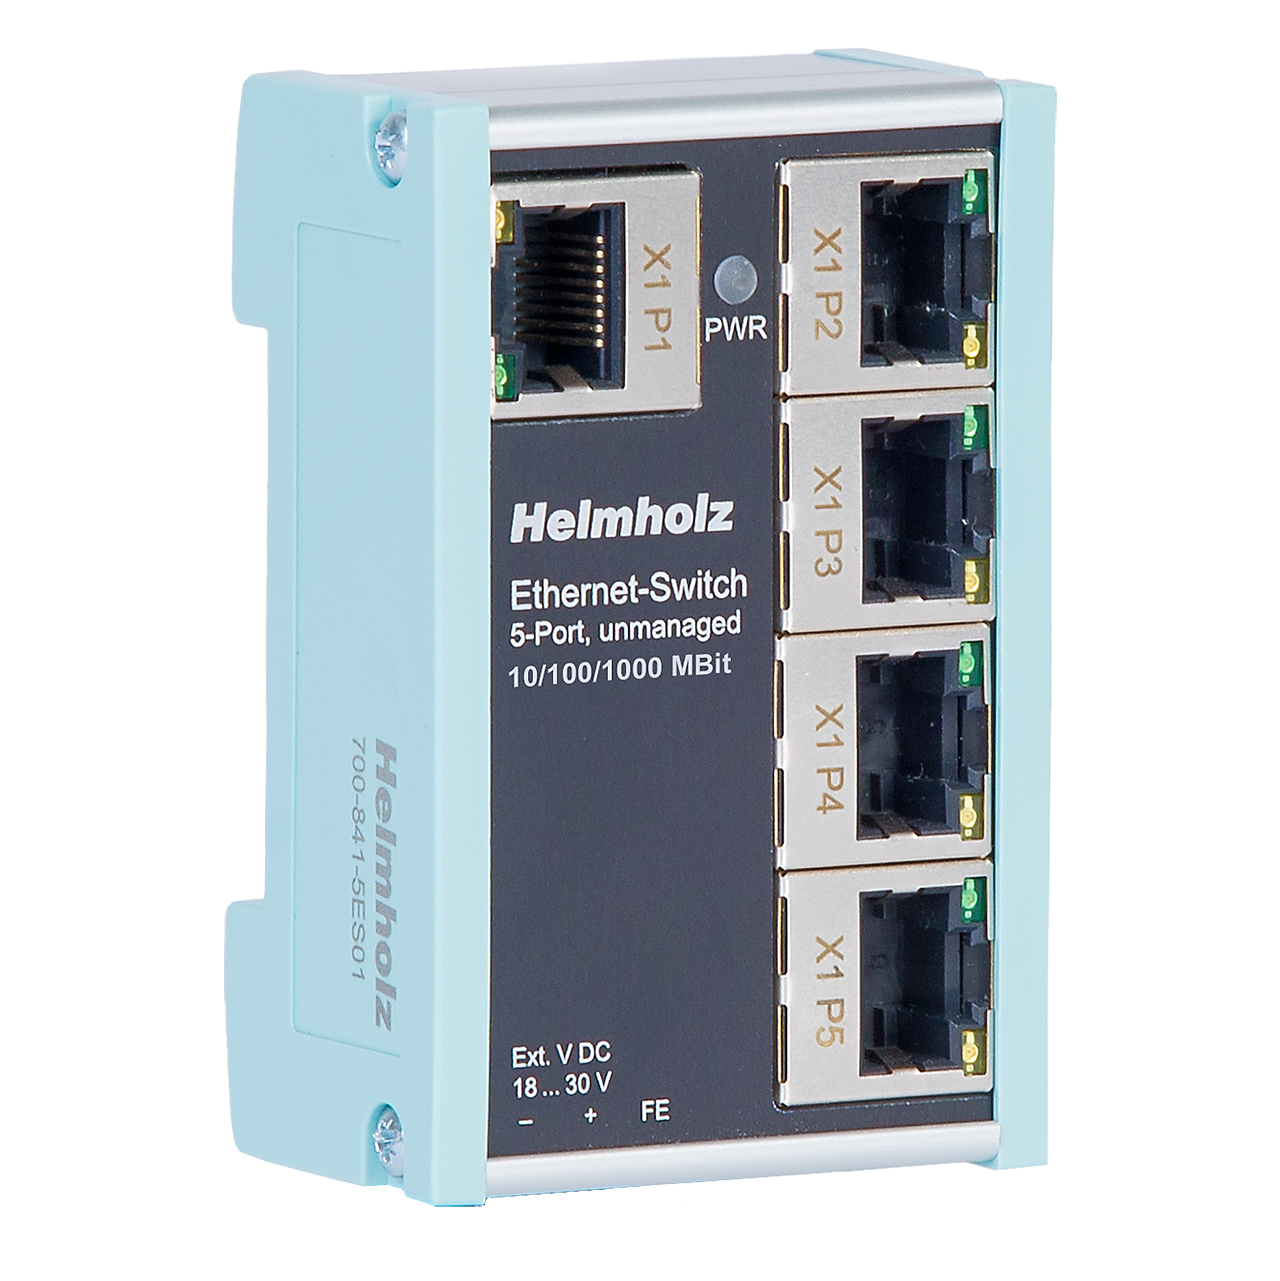 Helmholz Ethernet-Switch 5 puertos, no administrado, 10/100/1000 MBit montaje en riel DIN 700-841-5ES01